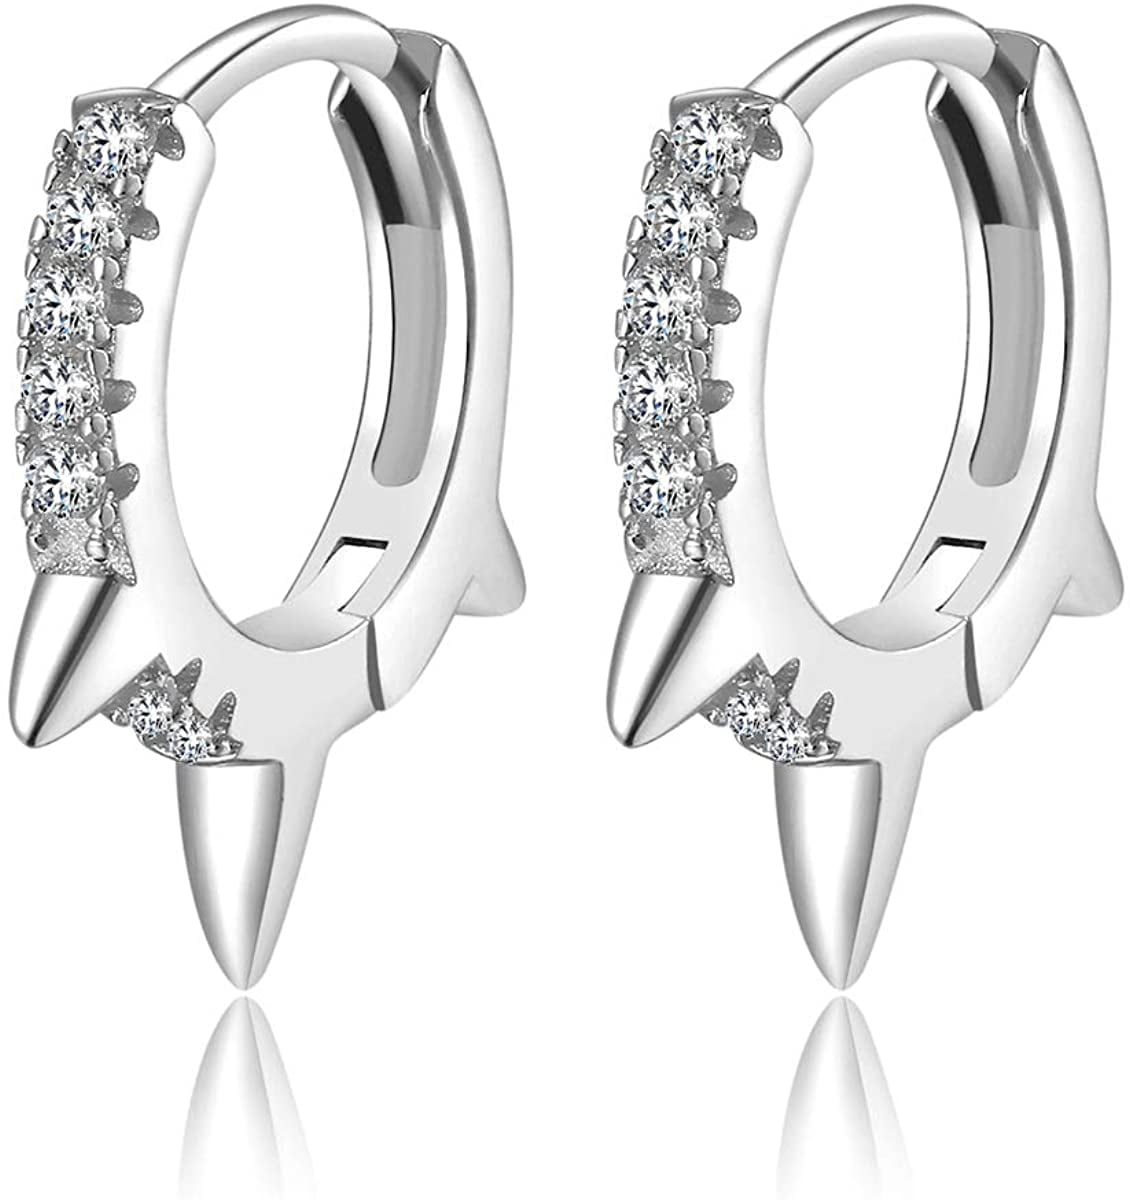 Spike Huggie Hoop Earrings 14k Gold Plated Sterling Silver Small Geometric Earrings for Women or Girl 